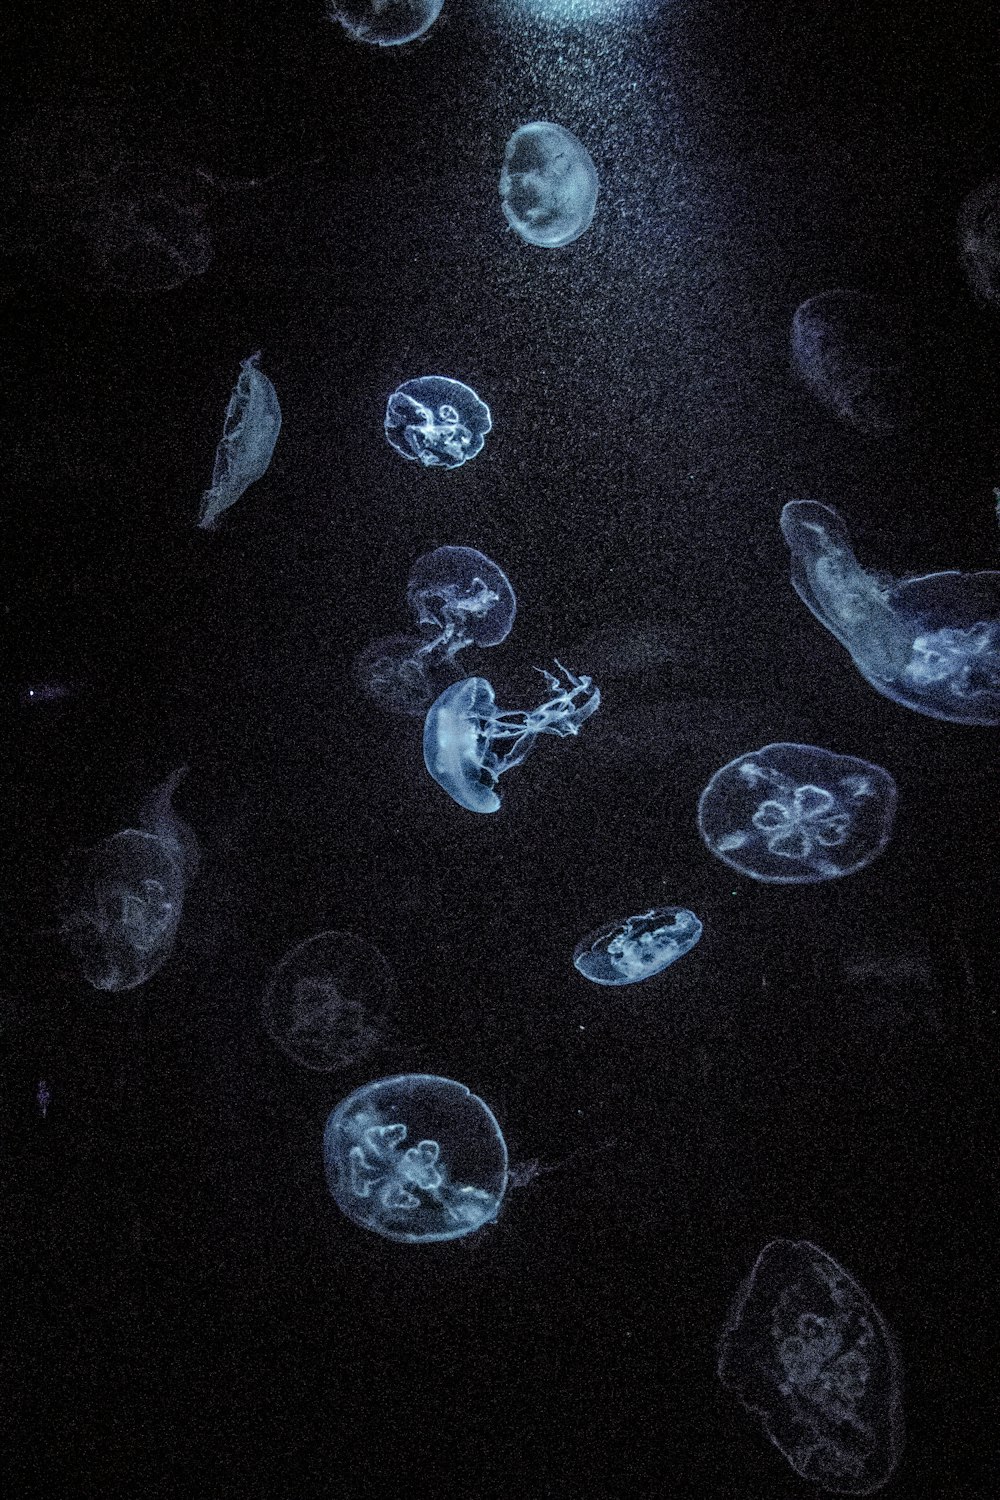 underwater photography of jellyfish